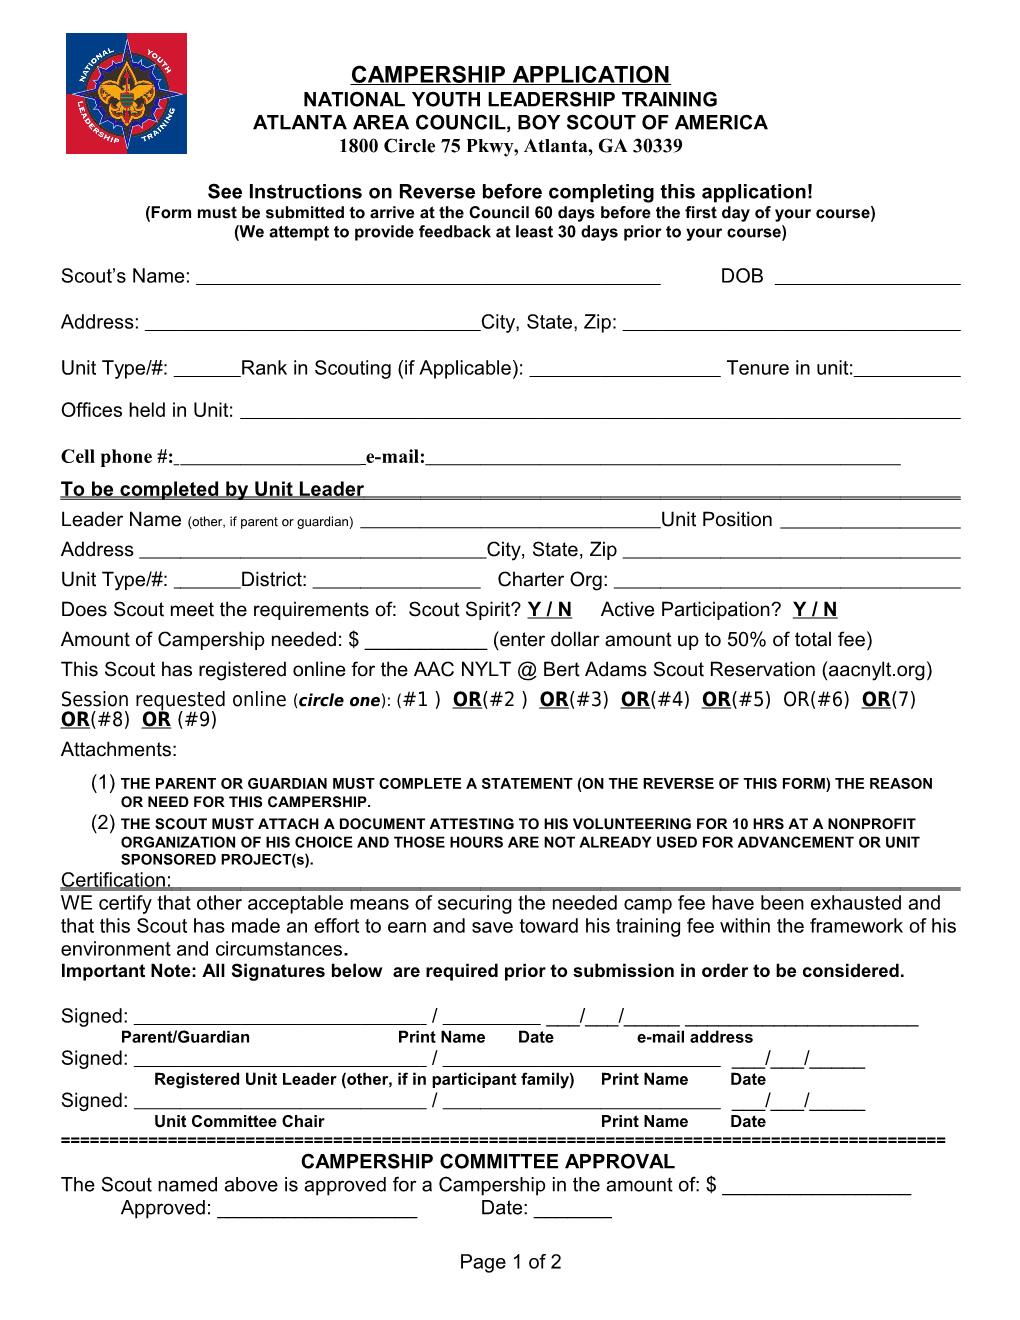 Campership Application Form